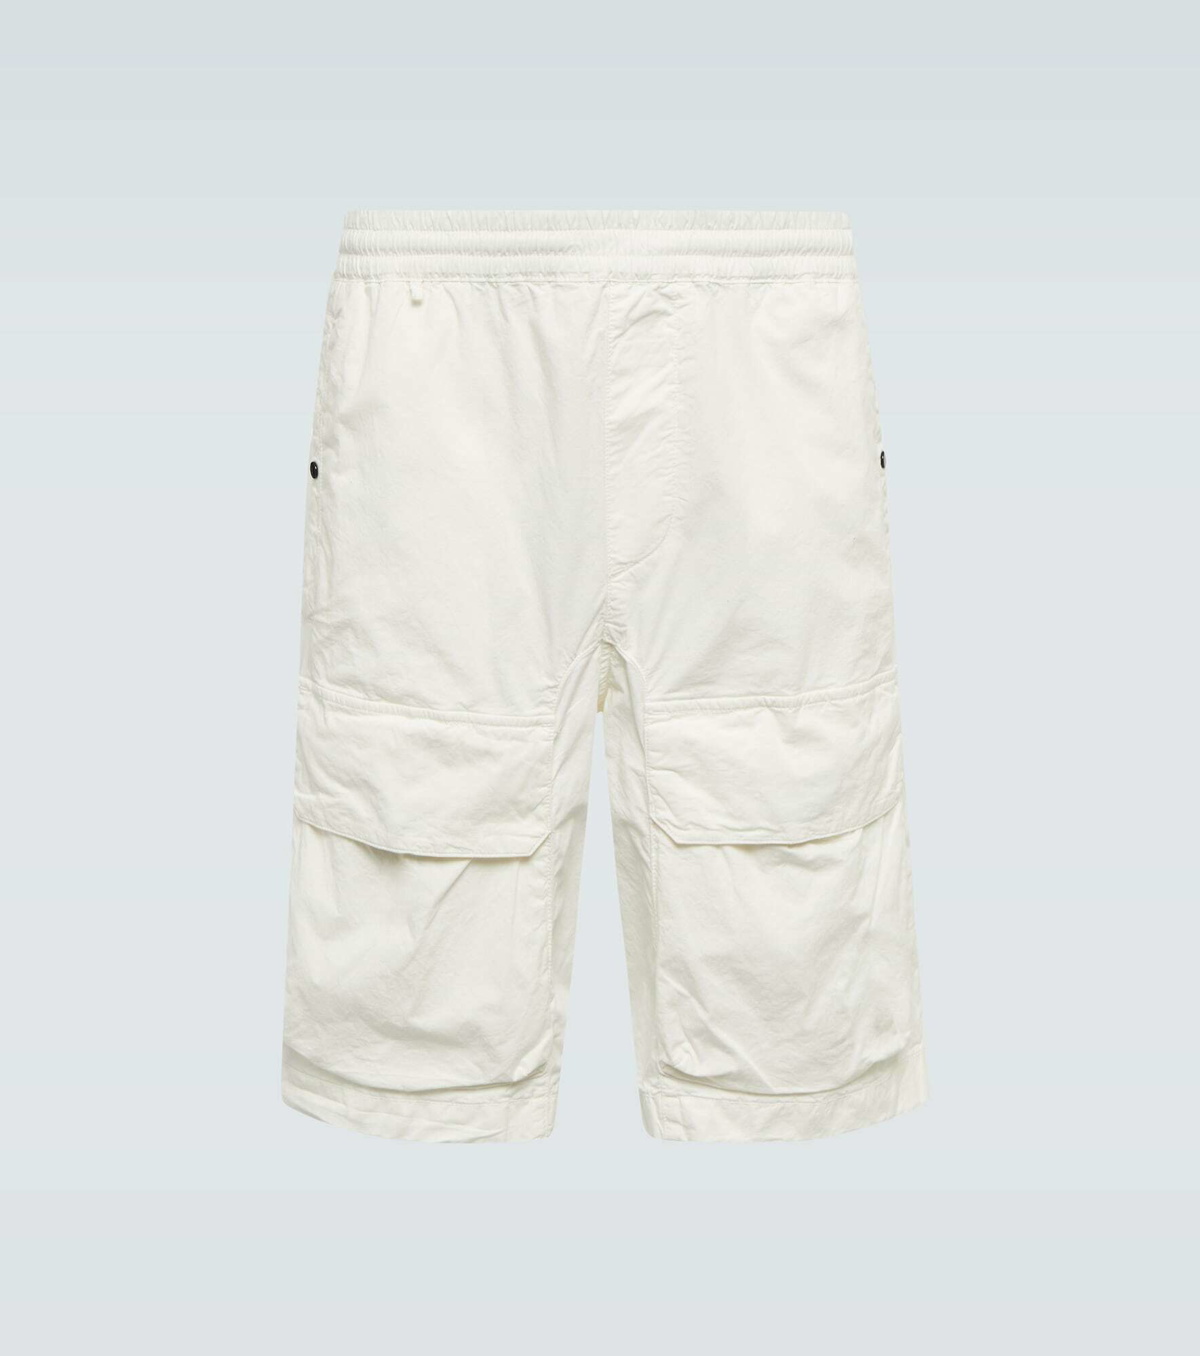 C.P. Company - Cotton-blend jersey cargo shorts